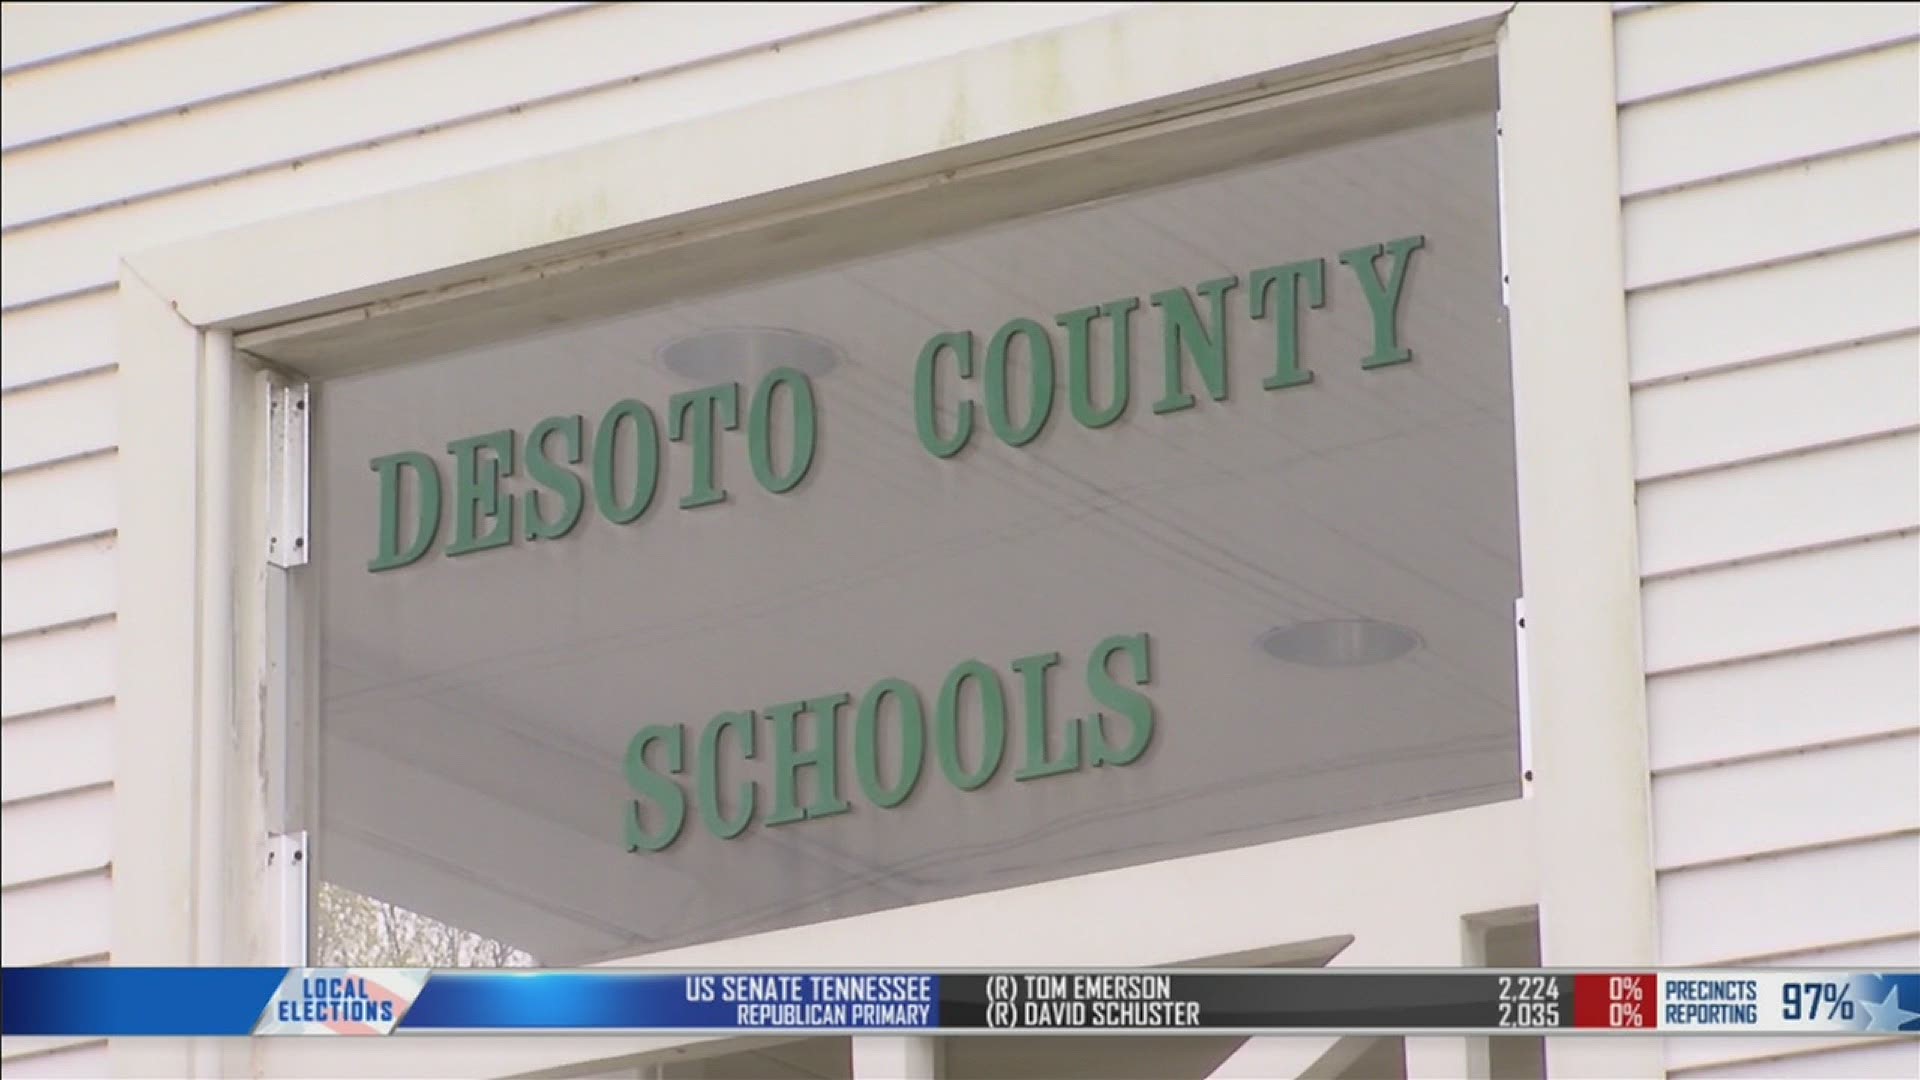 Desoto county fl schools job openings